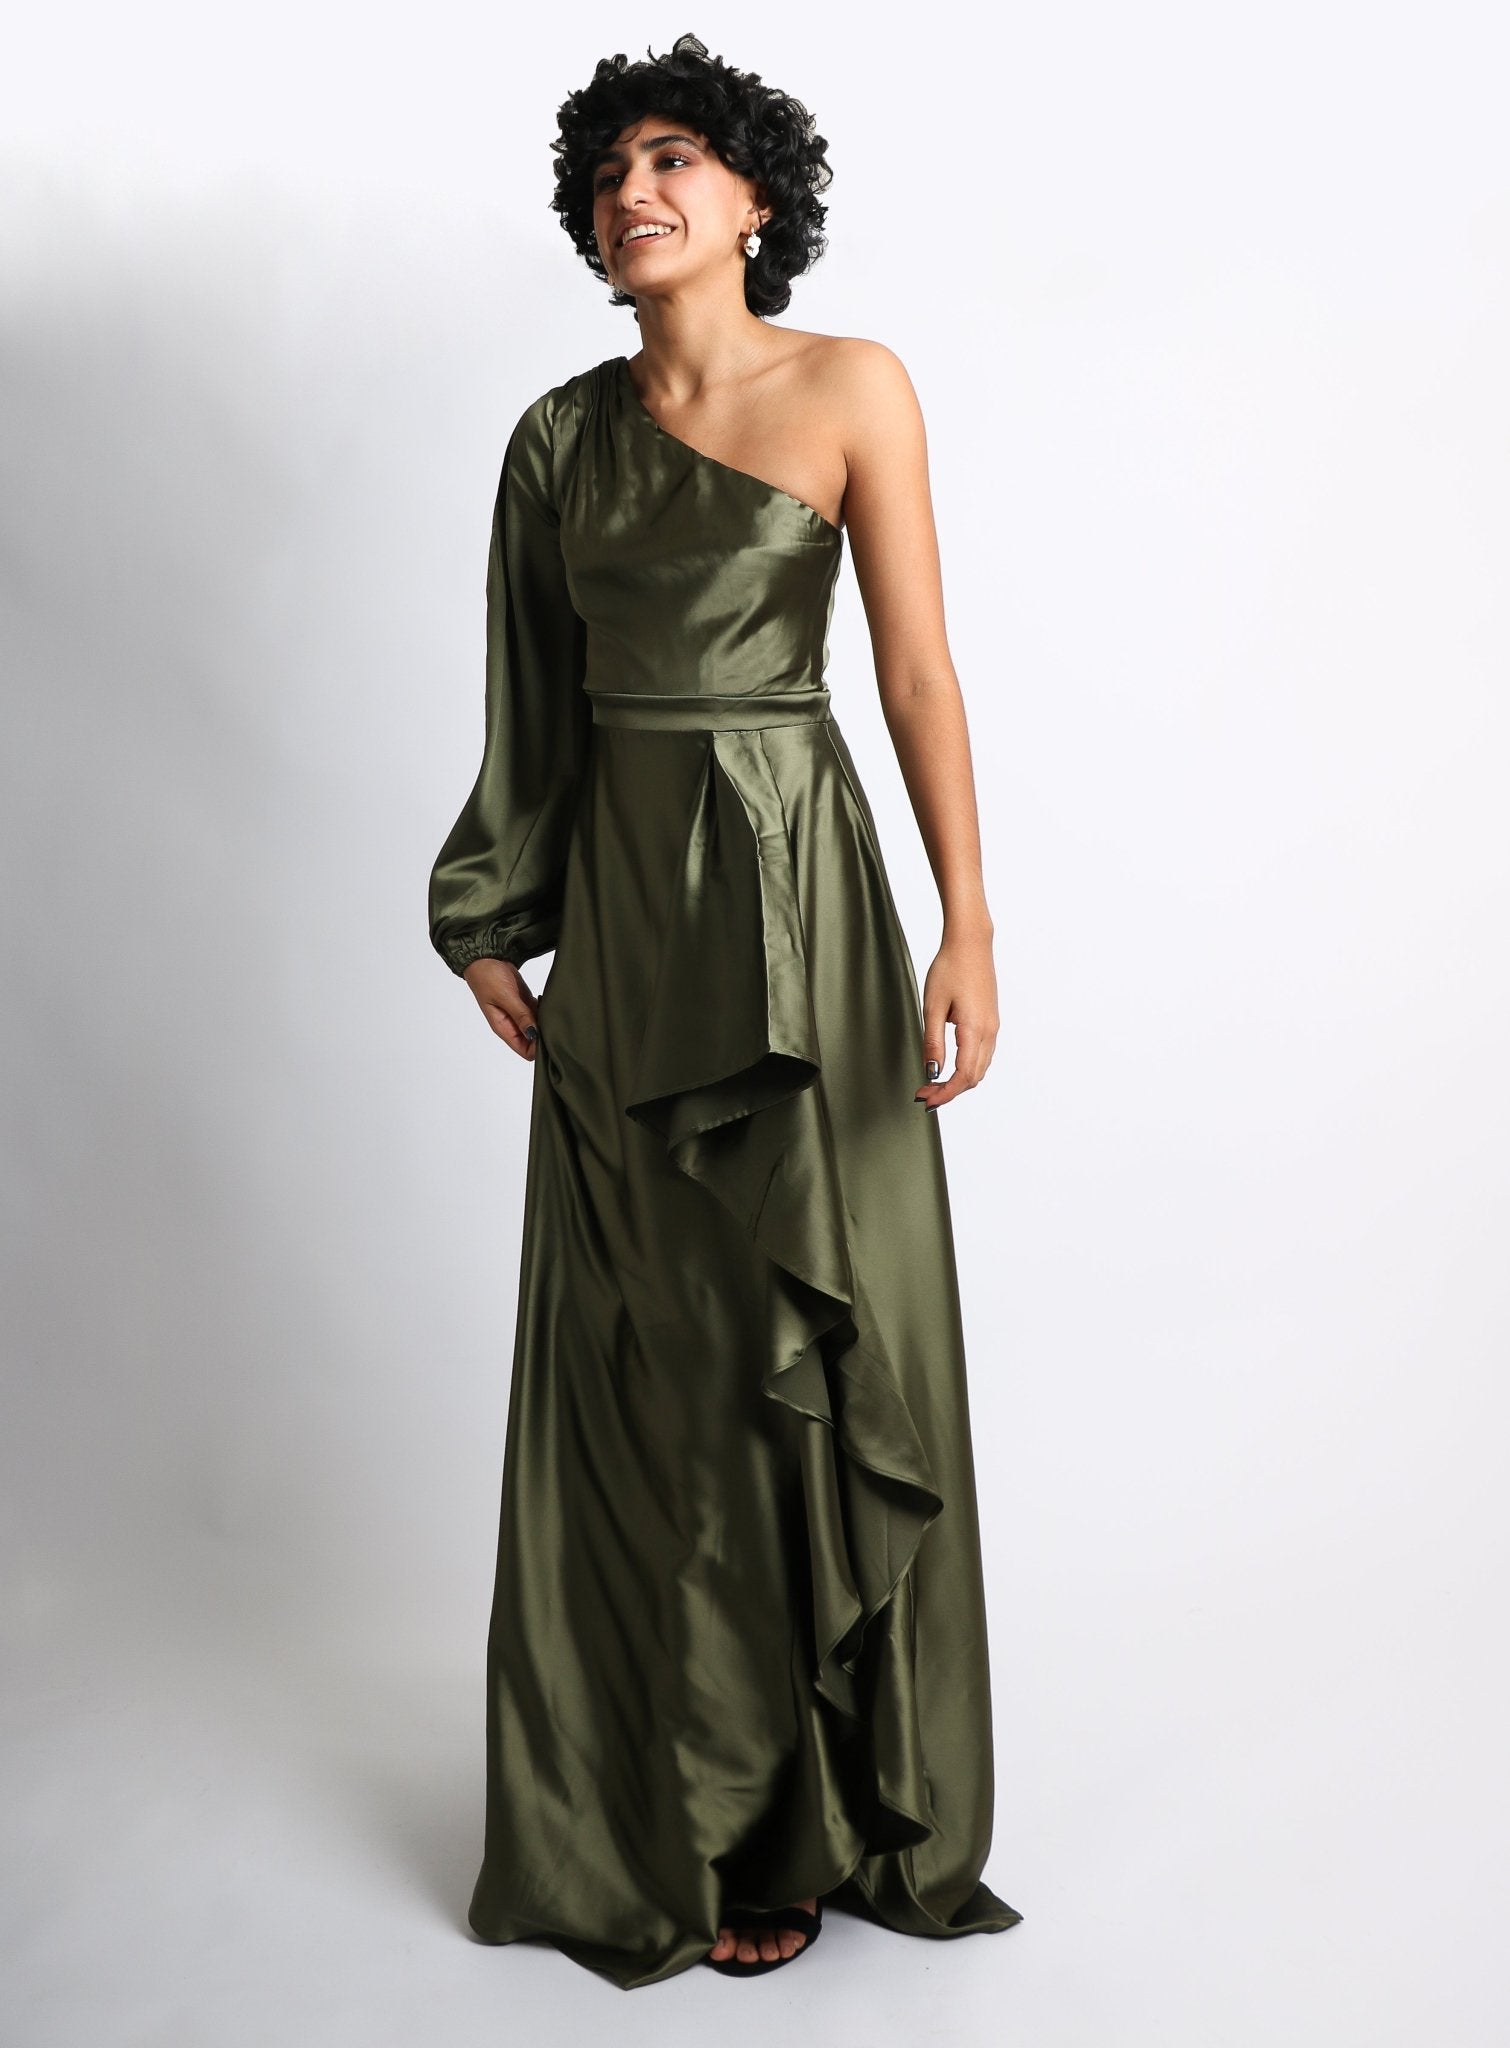 Ariane - venta - Lend the Trend renta de vestidos mexico